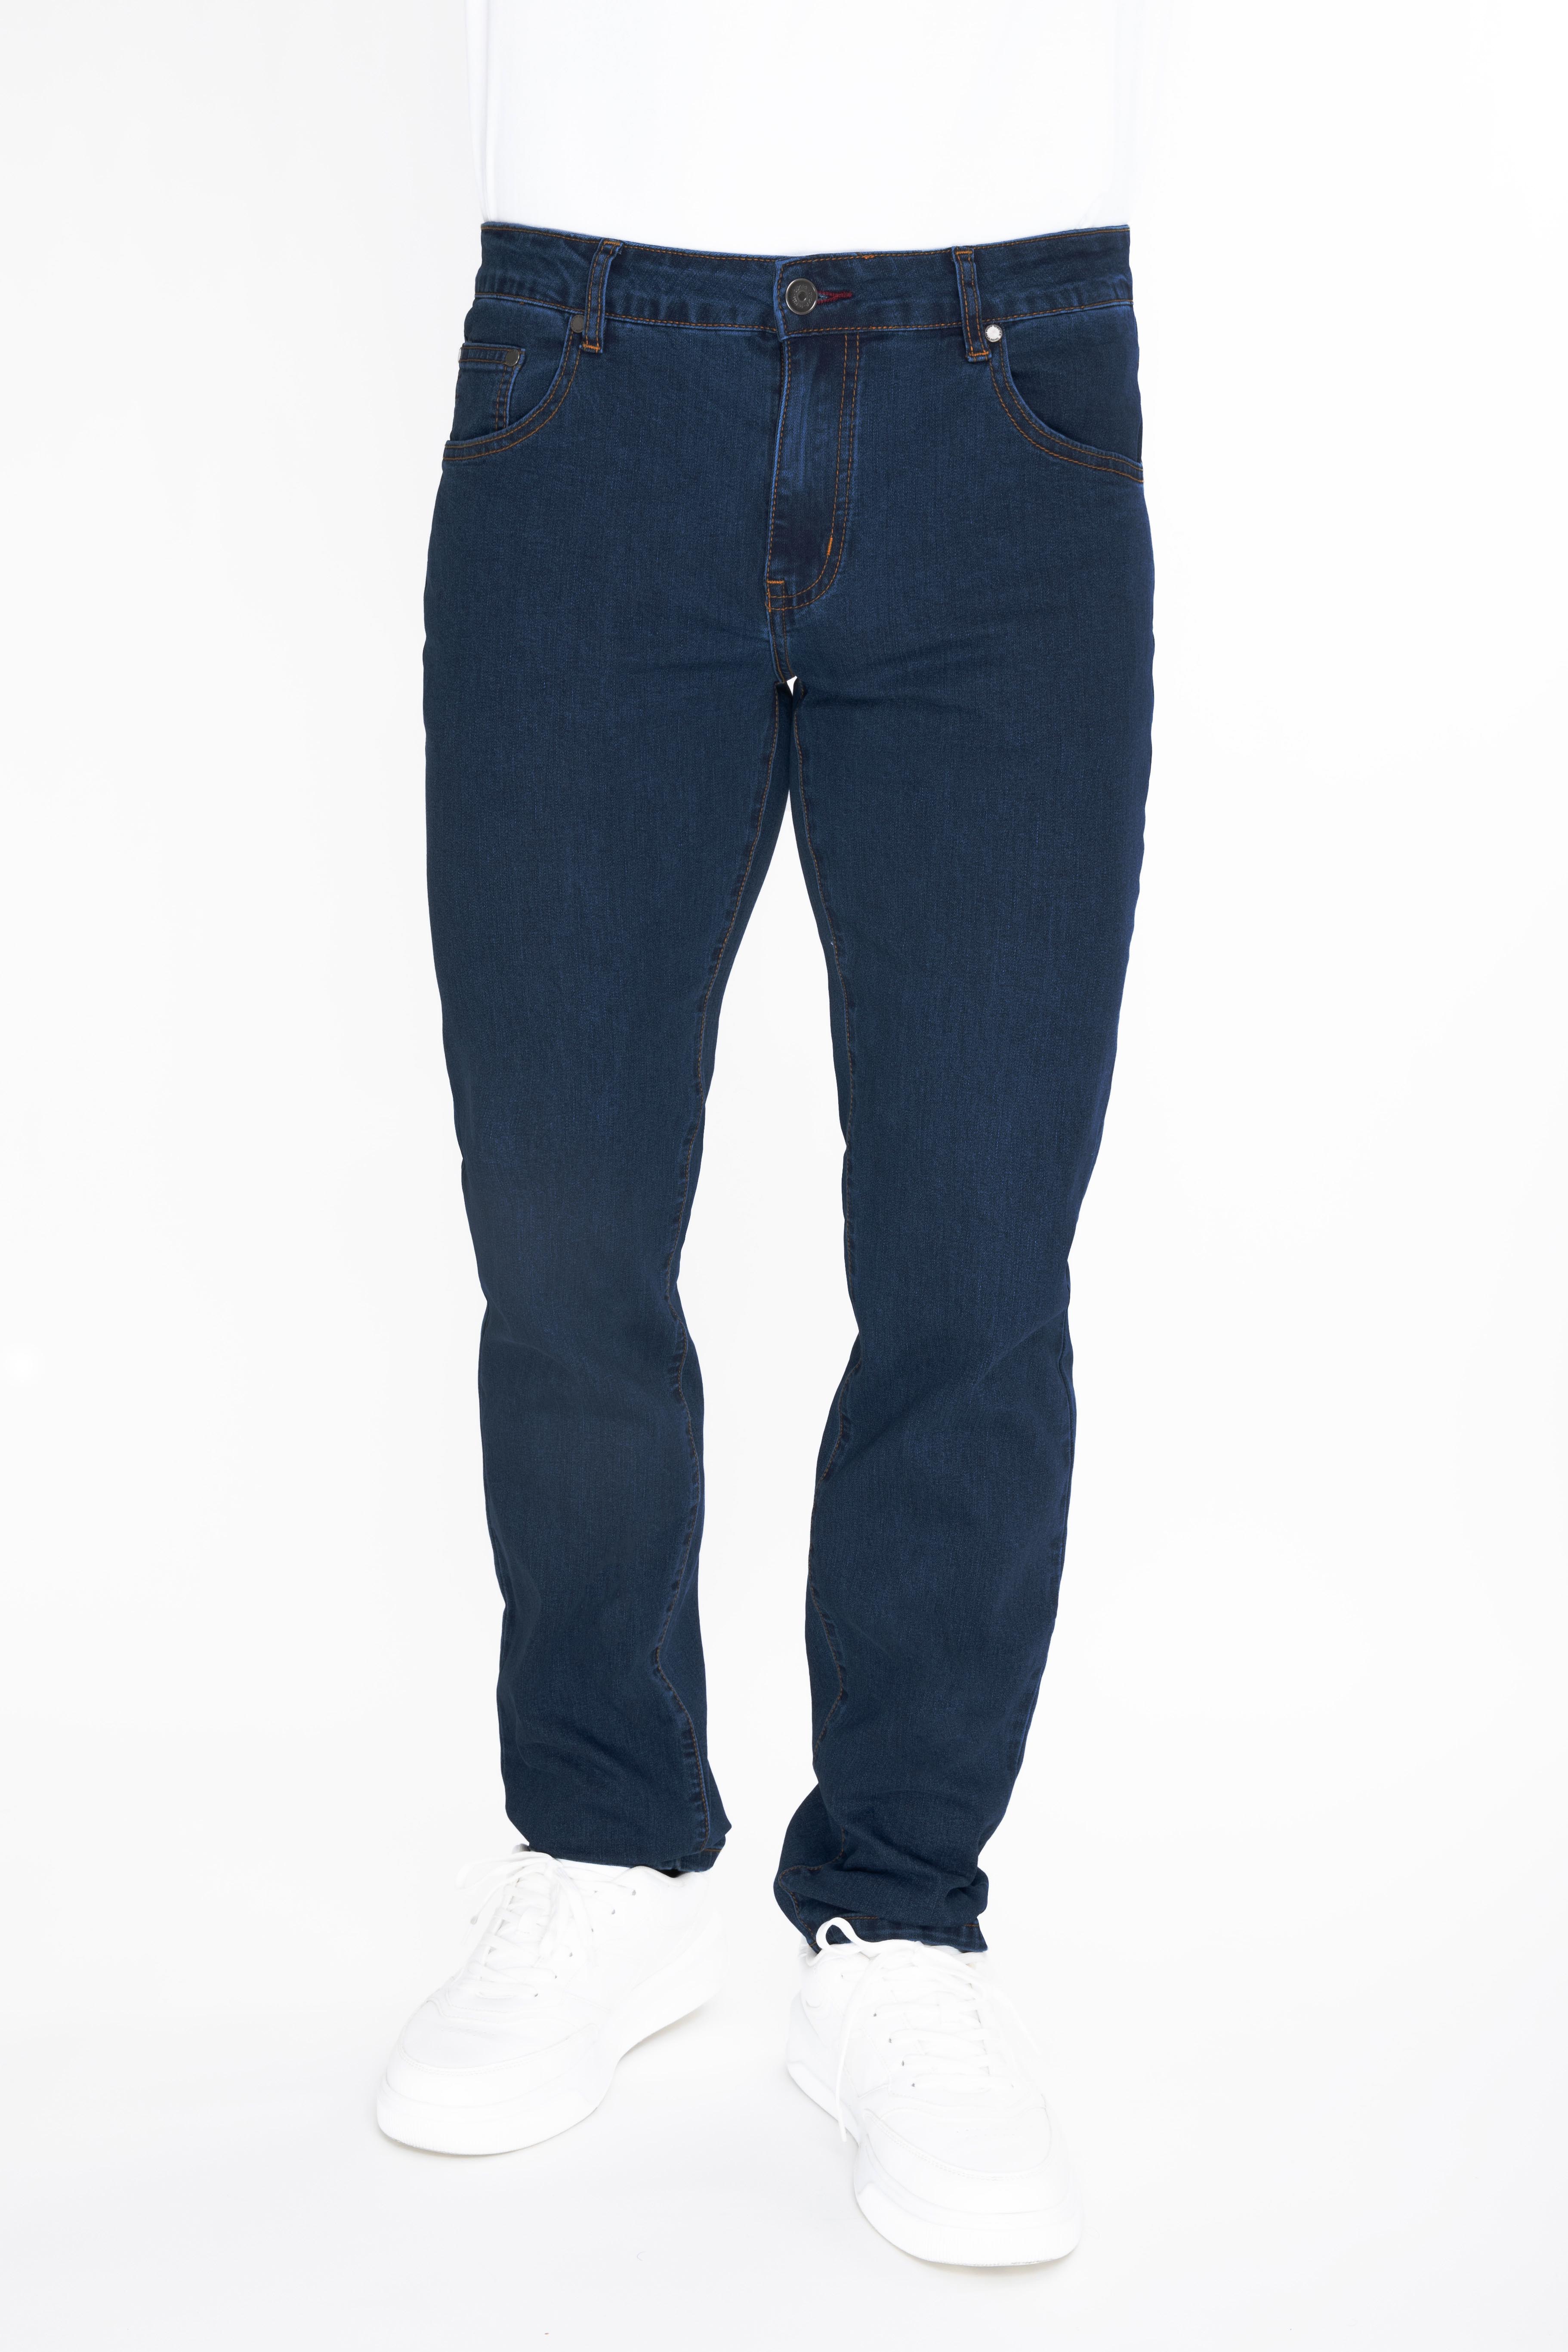 CABALLEROS-pantalon-jeans-oscar-p-caballeros